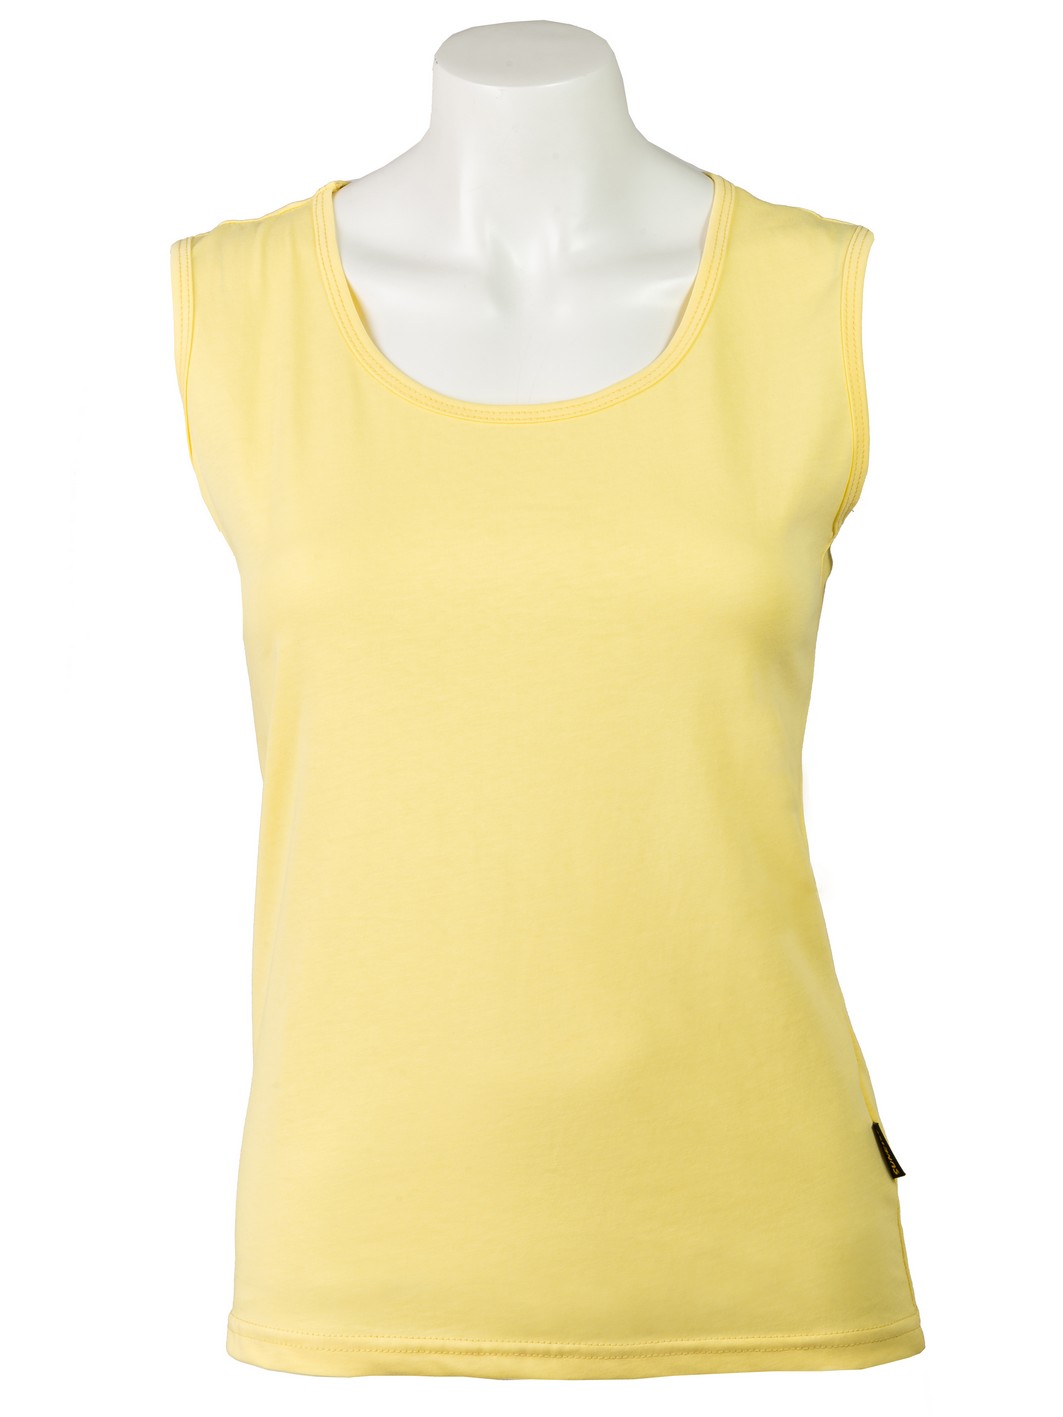 ženska majica žuta